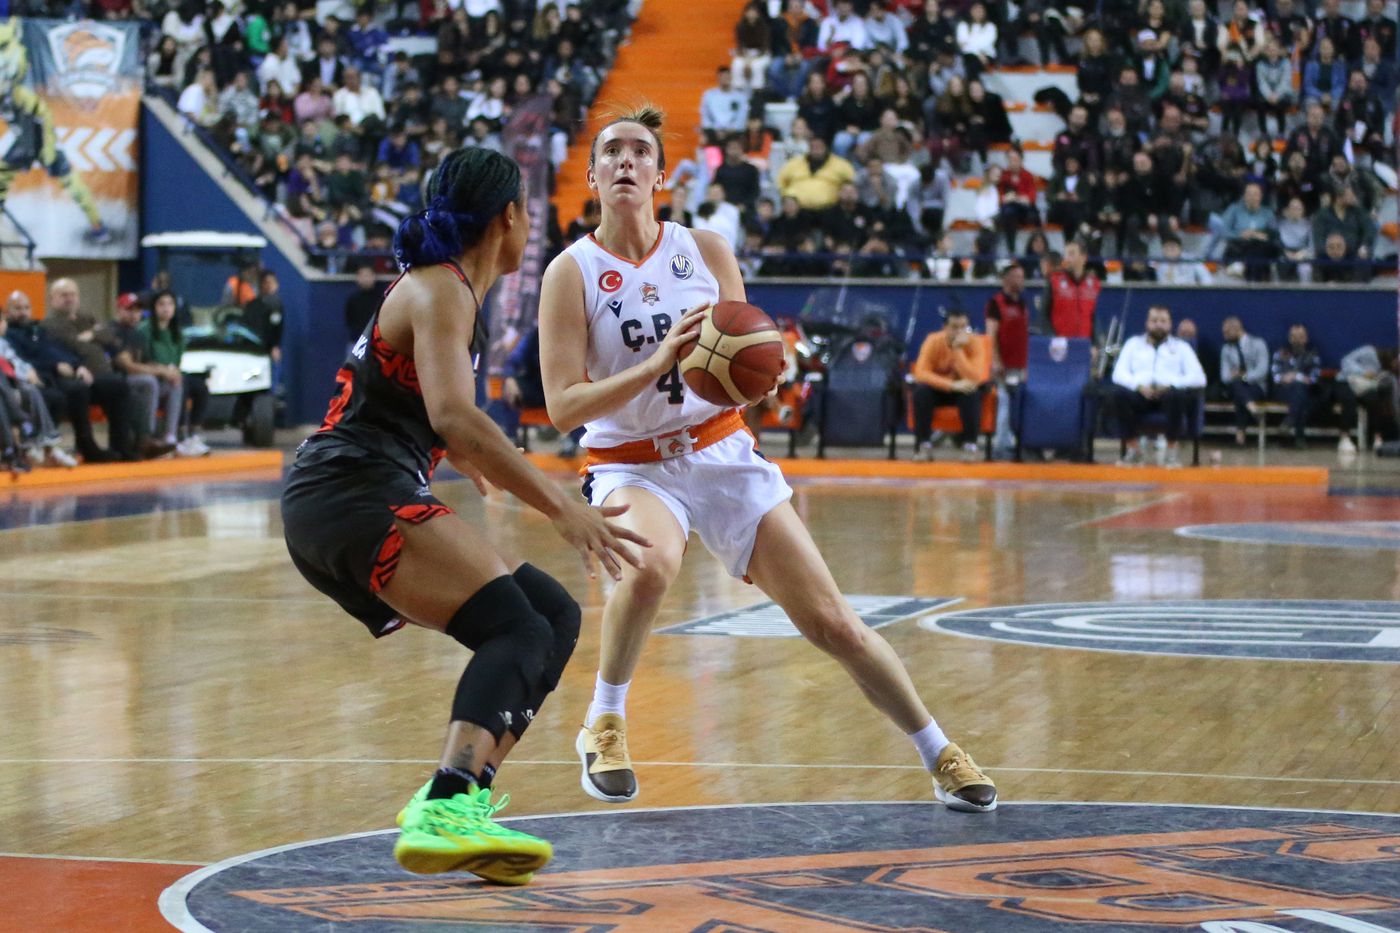 FIBA: Fenerbahçe qualifies for EuroLeague Women Quarter-Finals - Swish Appeal